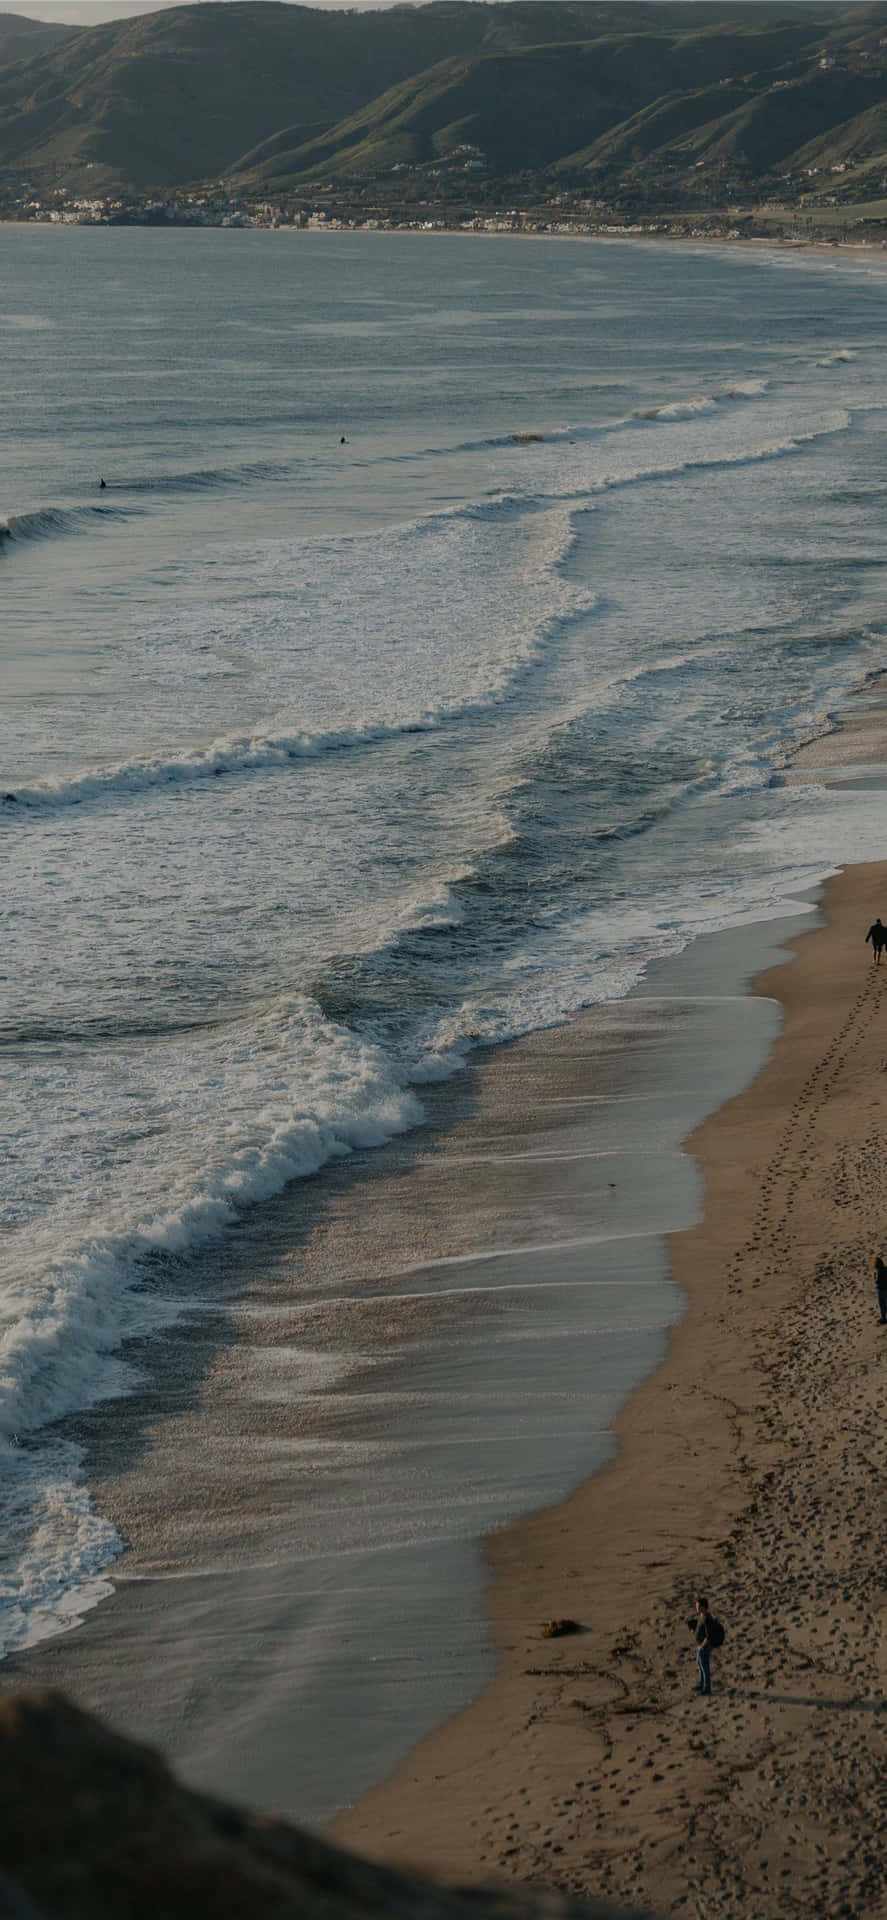 Iphone X Malibu Background Foamy Ocean Wave